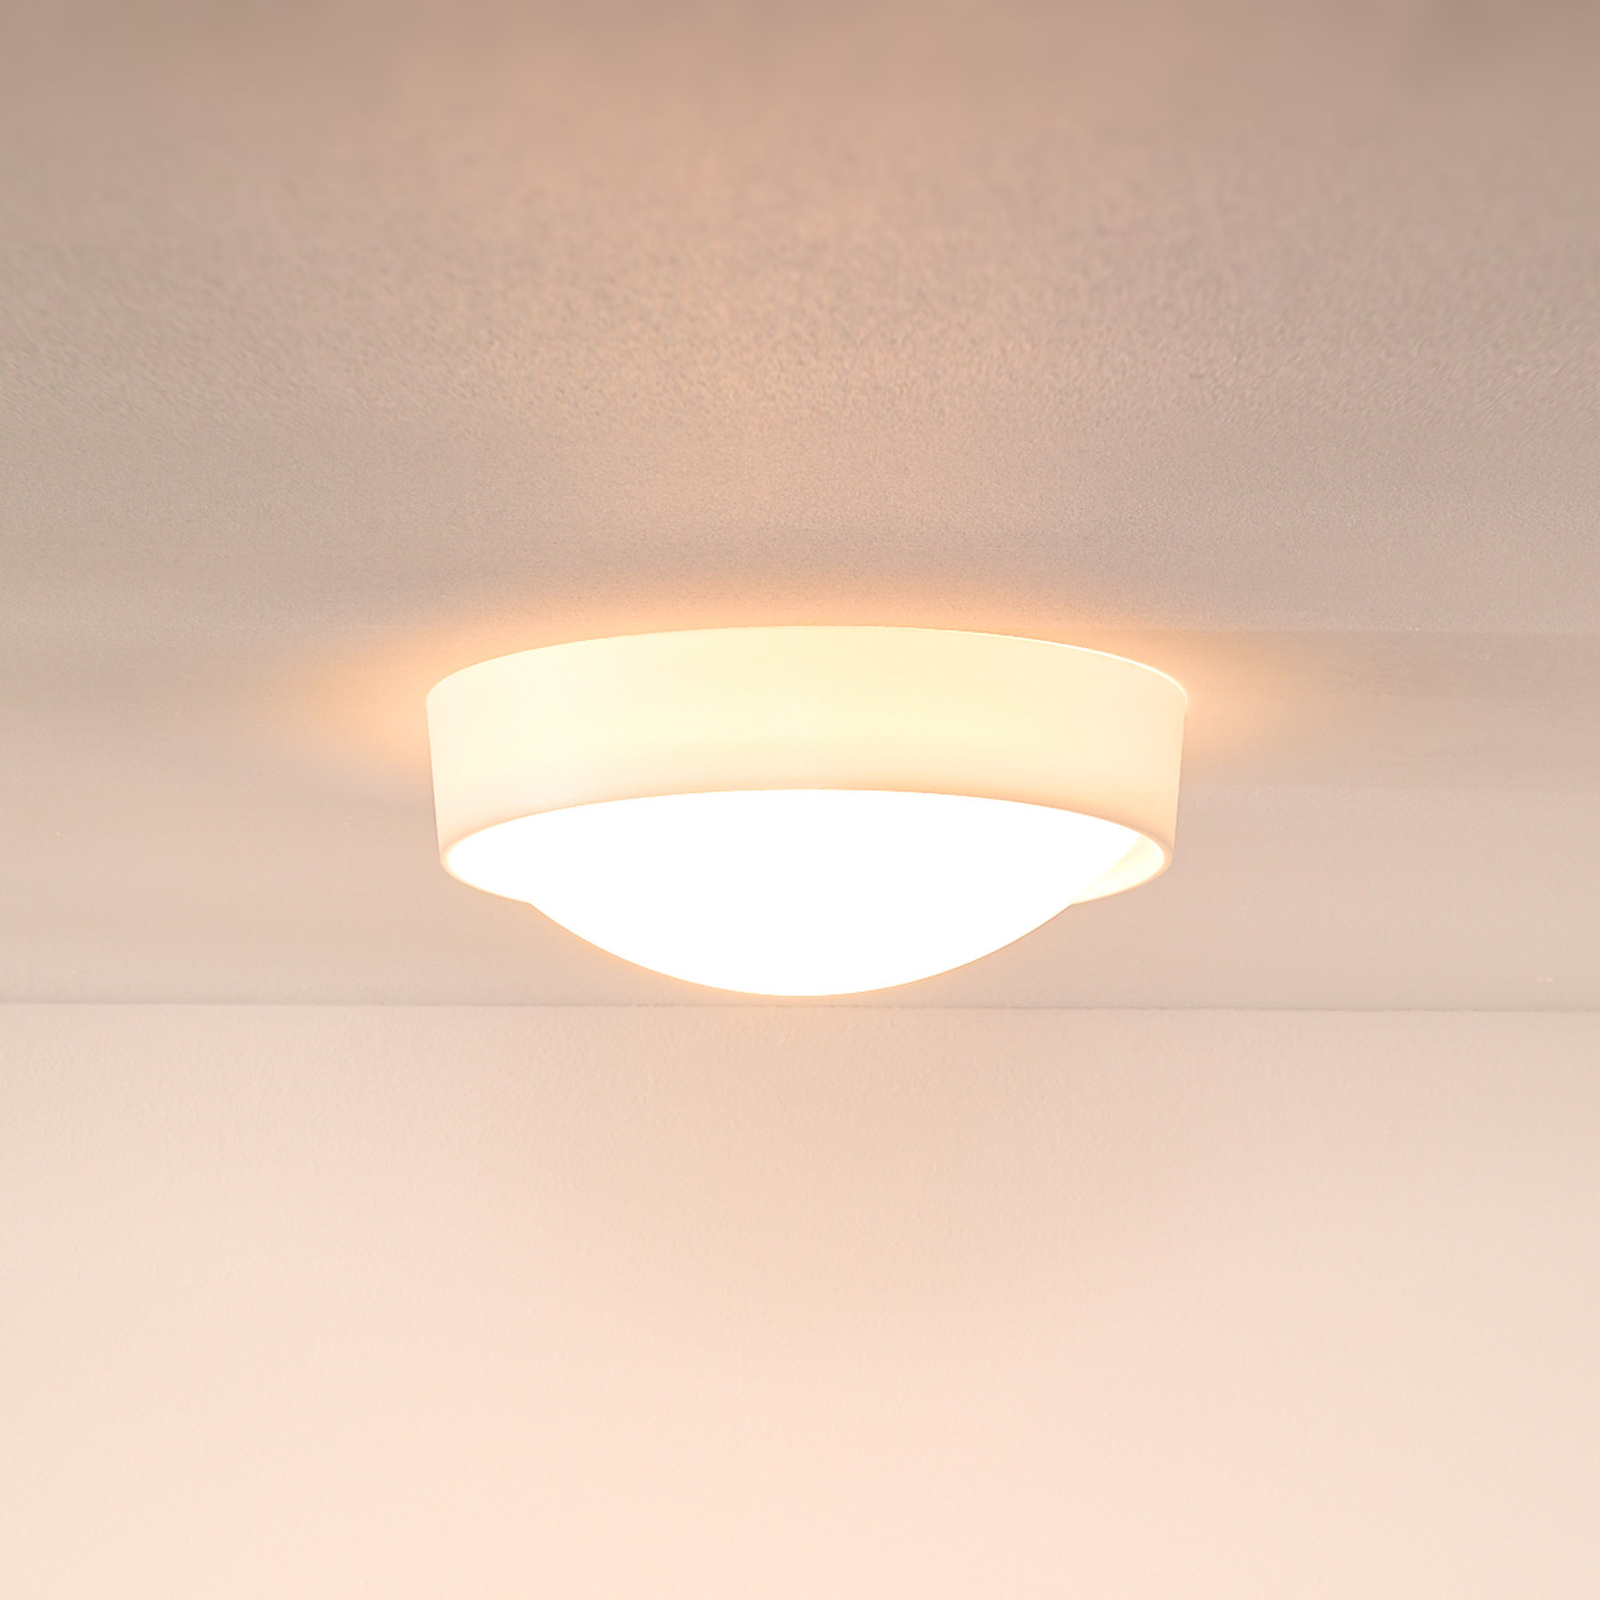 Lex ceiling light, round, Ø 25 cm, white